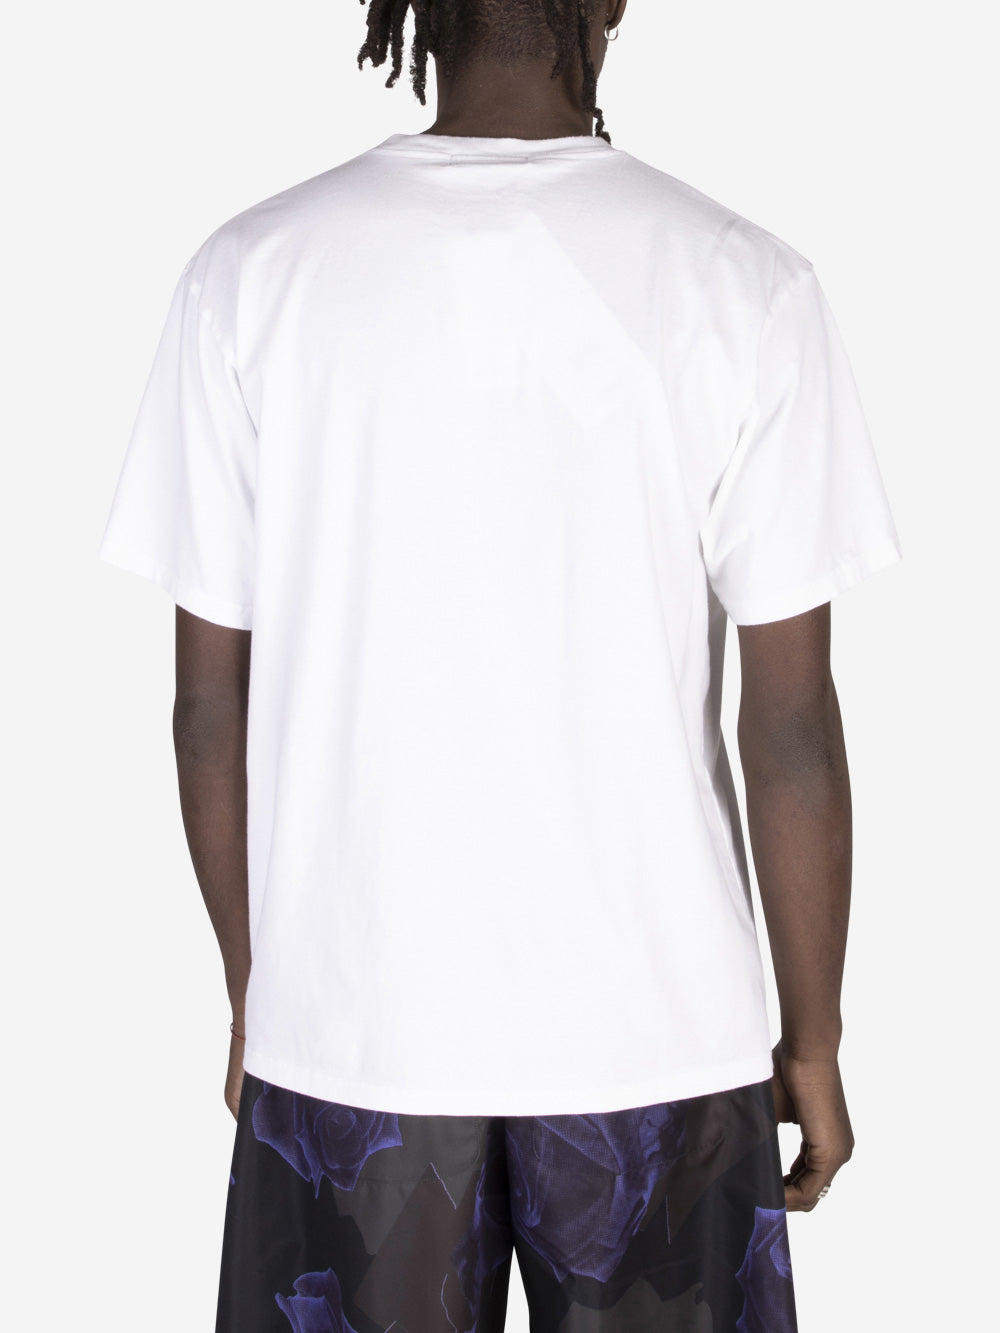 UNDERCOVER T-shirt 'The End' Bianco Urbanstaroma